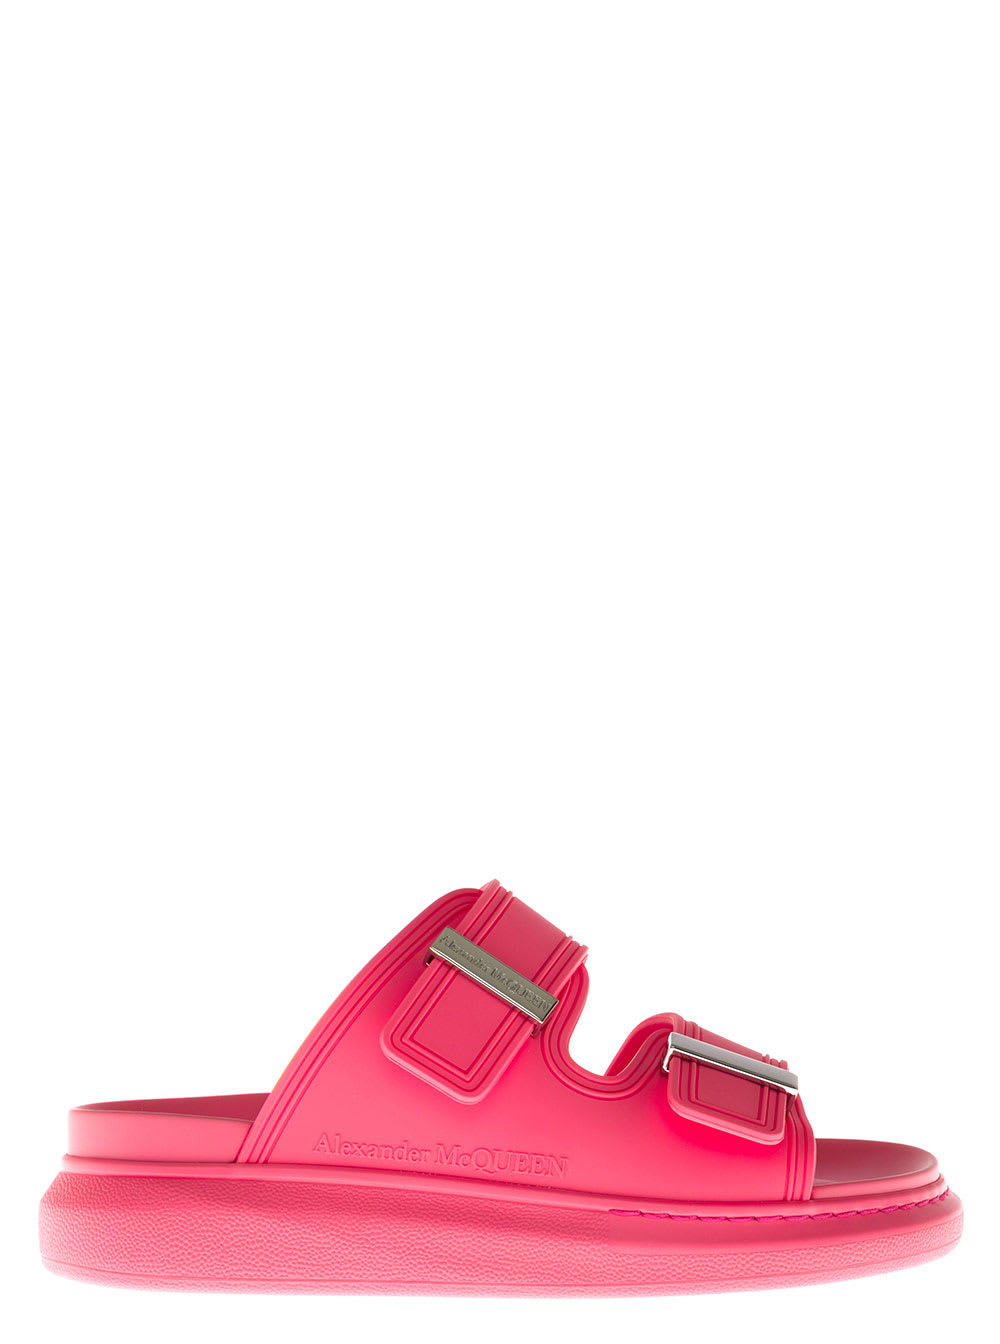 Alexander McQueen Hybrid Pink Plastic Sandals